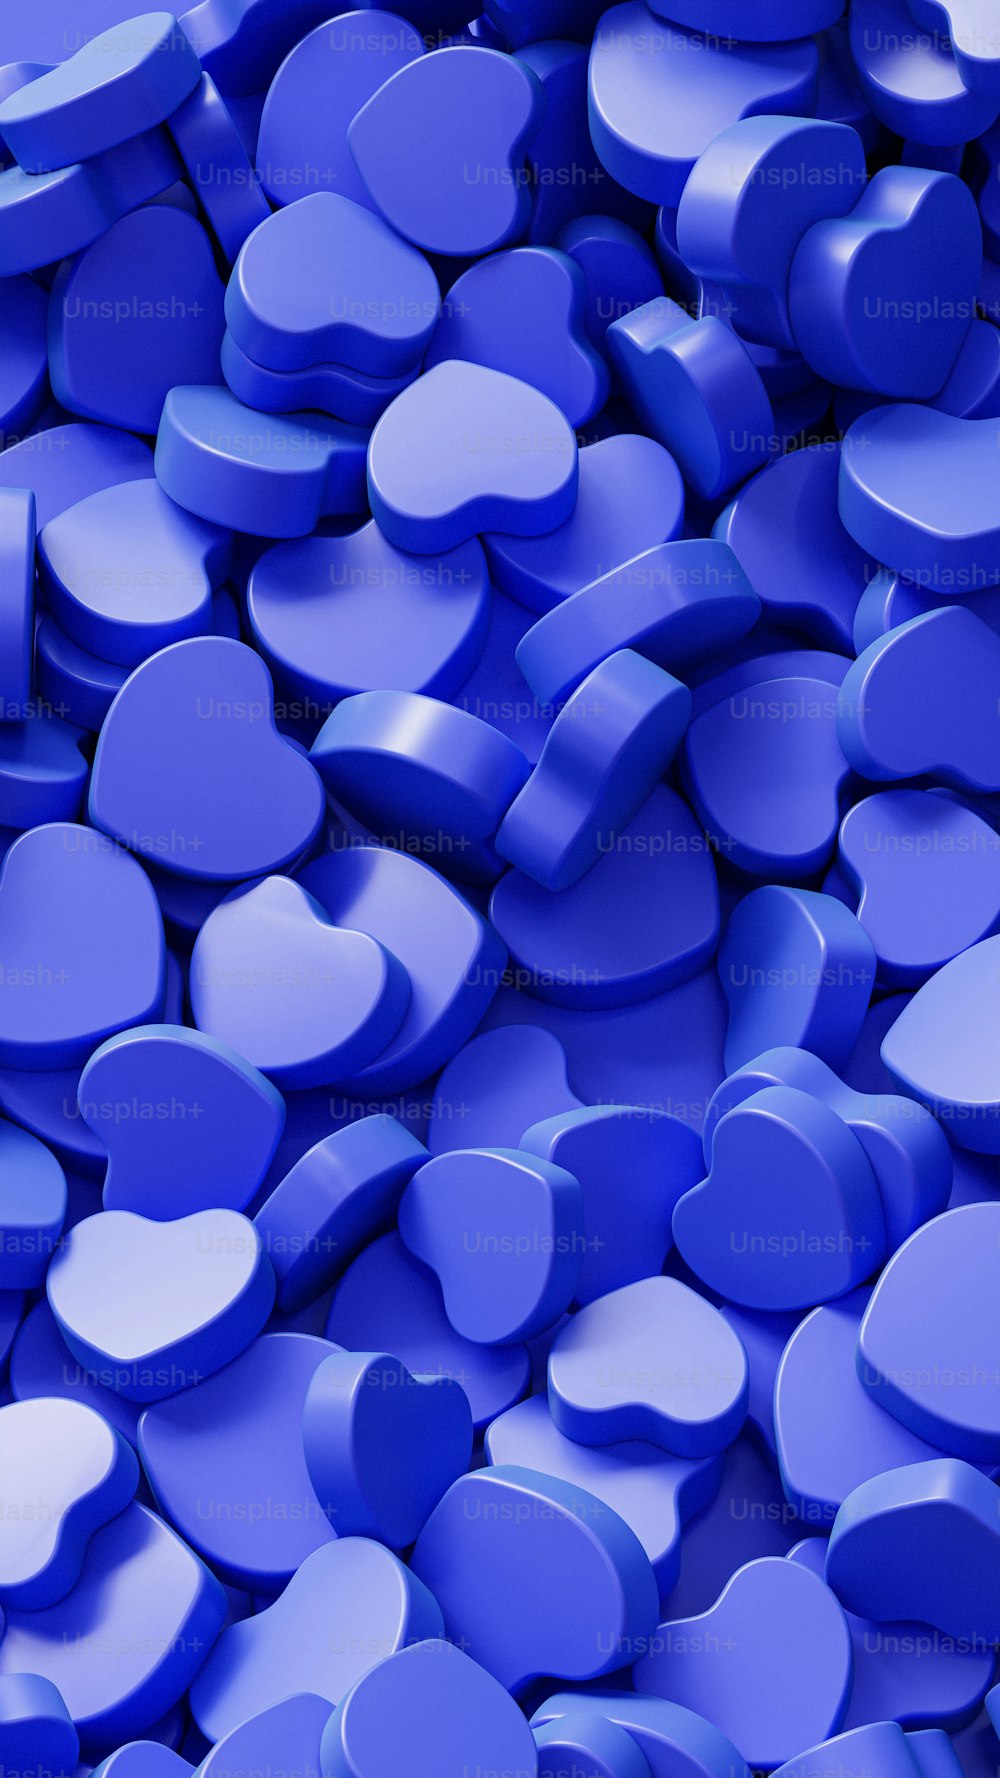 Un gran grupo de píldoras azules y blancas